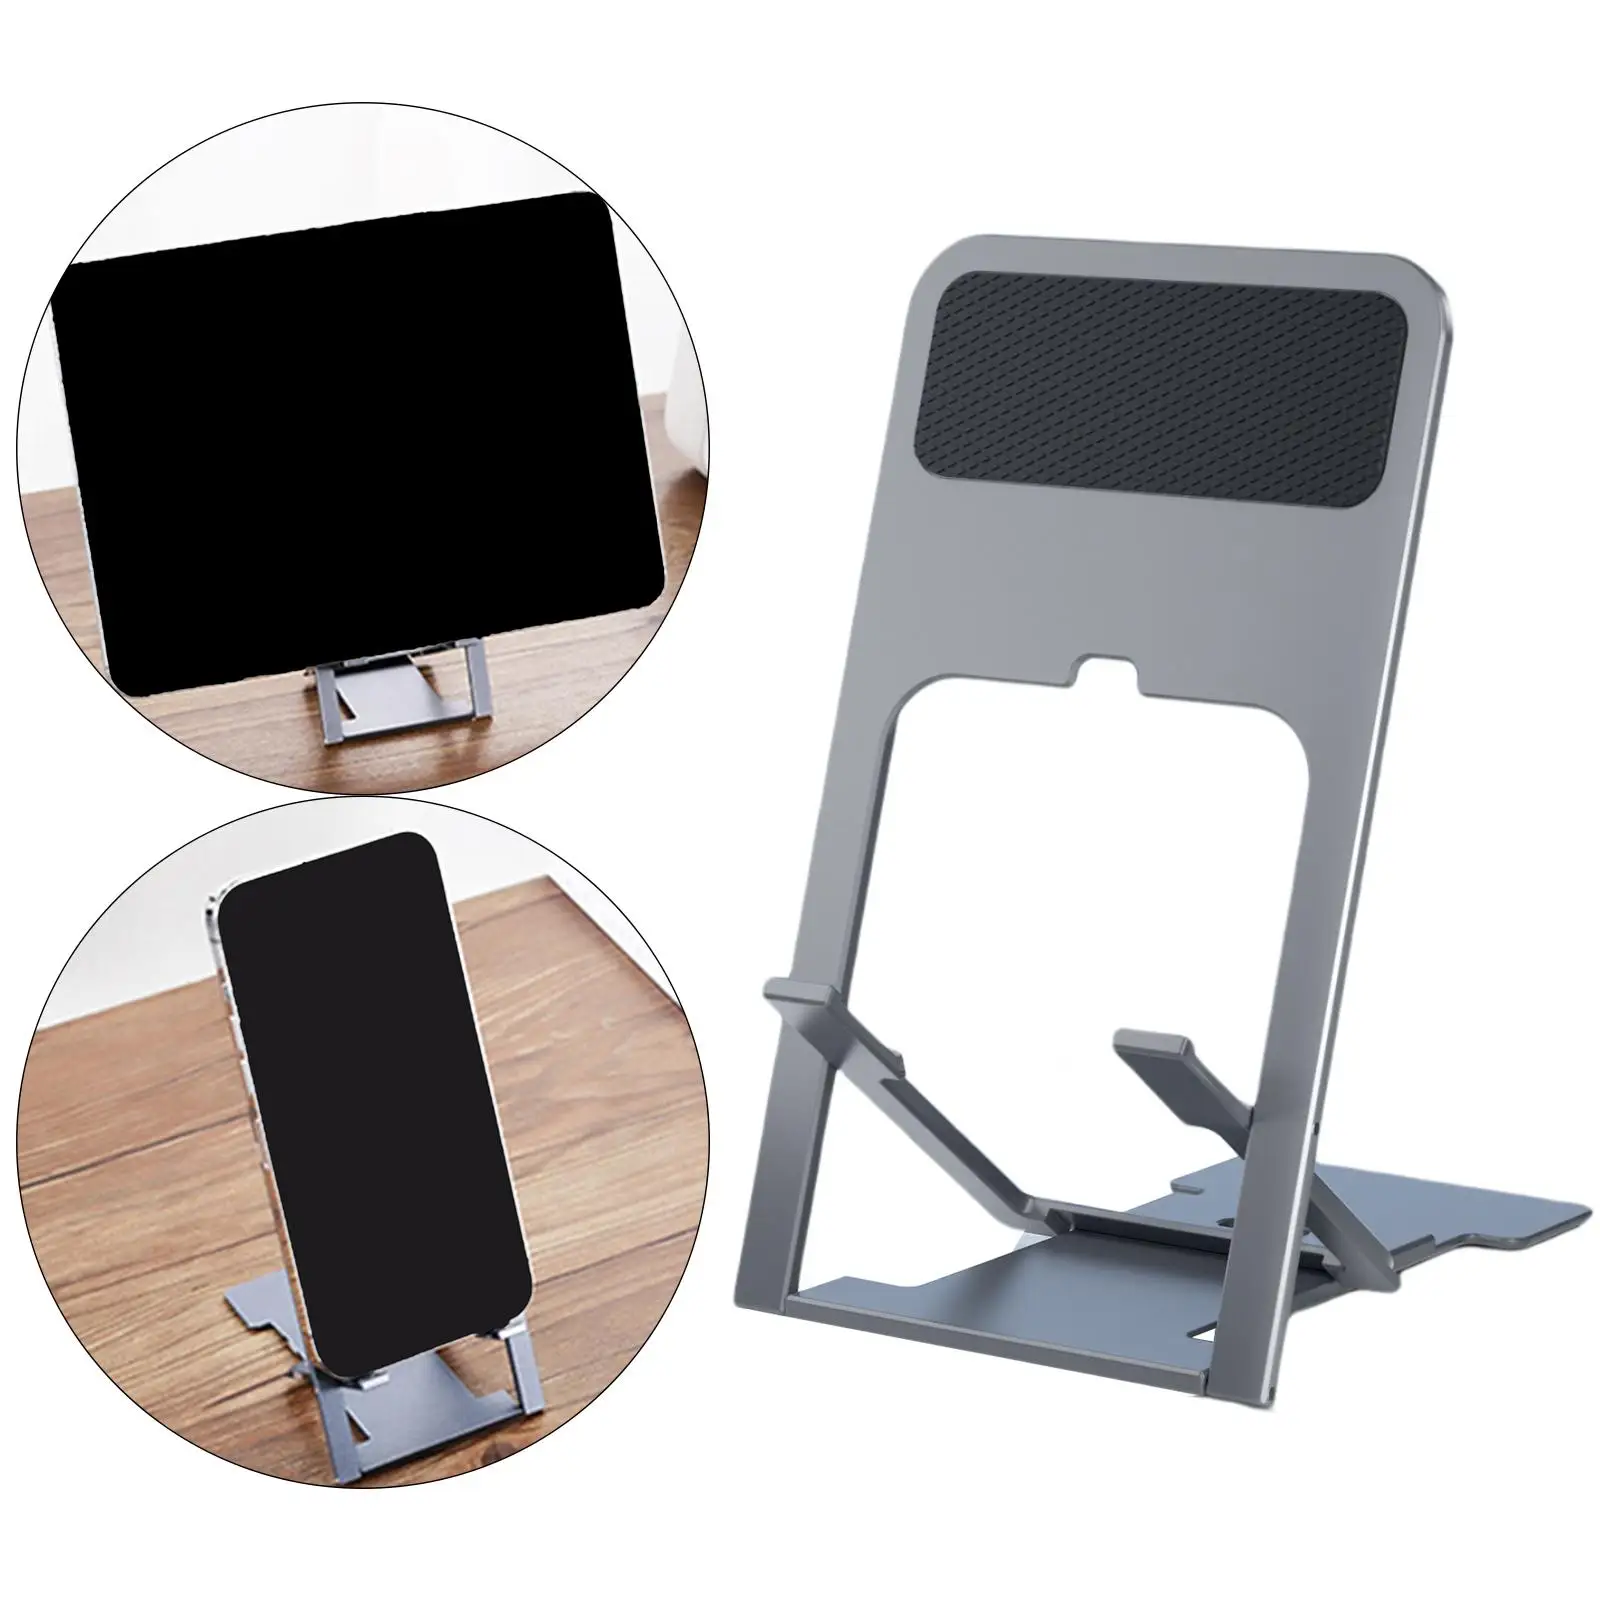 Vertical Folding Mobile Phone Holder Stand Angle Adjustable Stable Desktop Charger for Learning Hotel Office